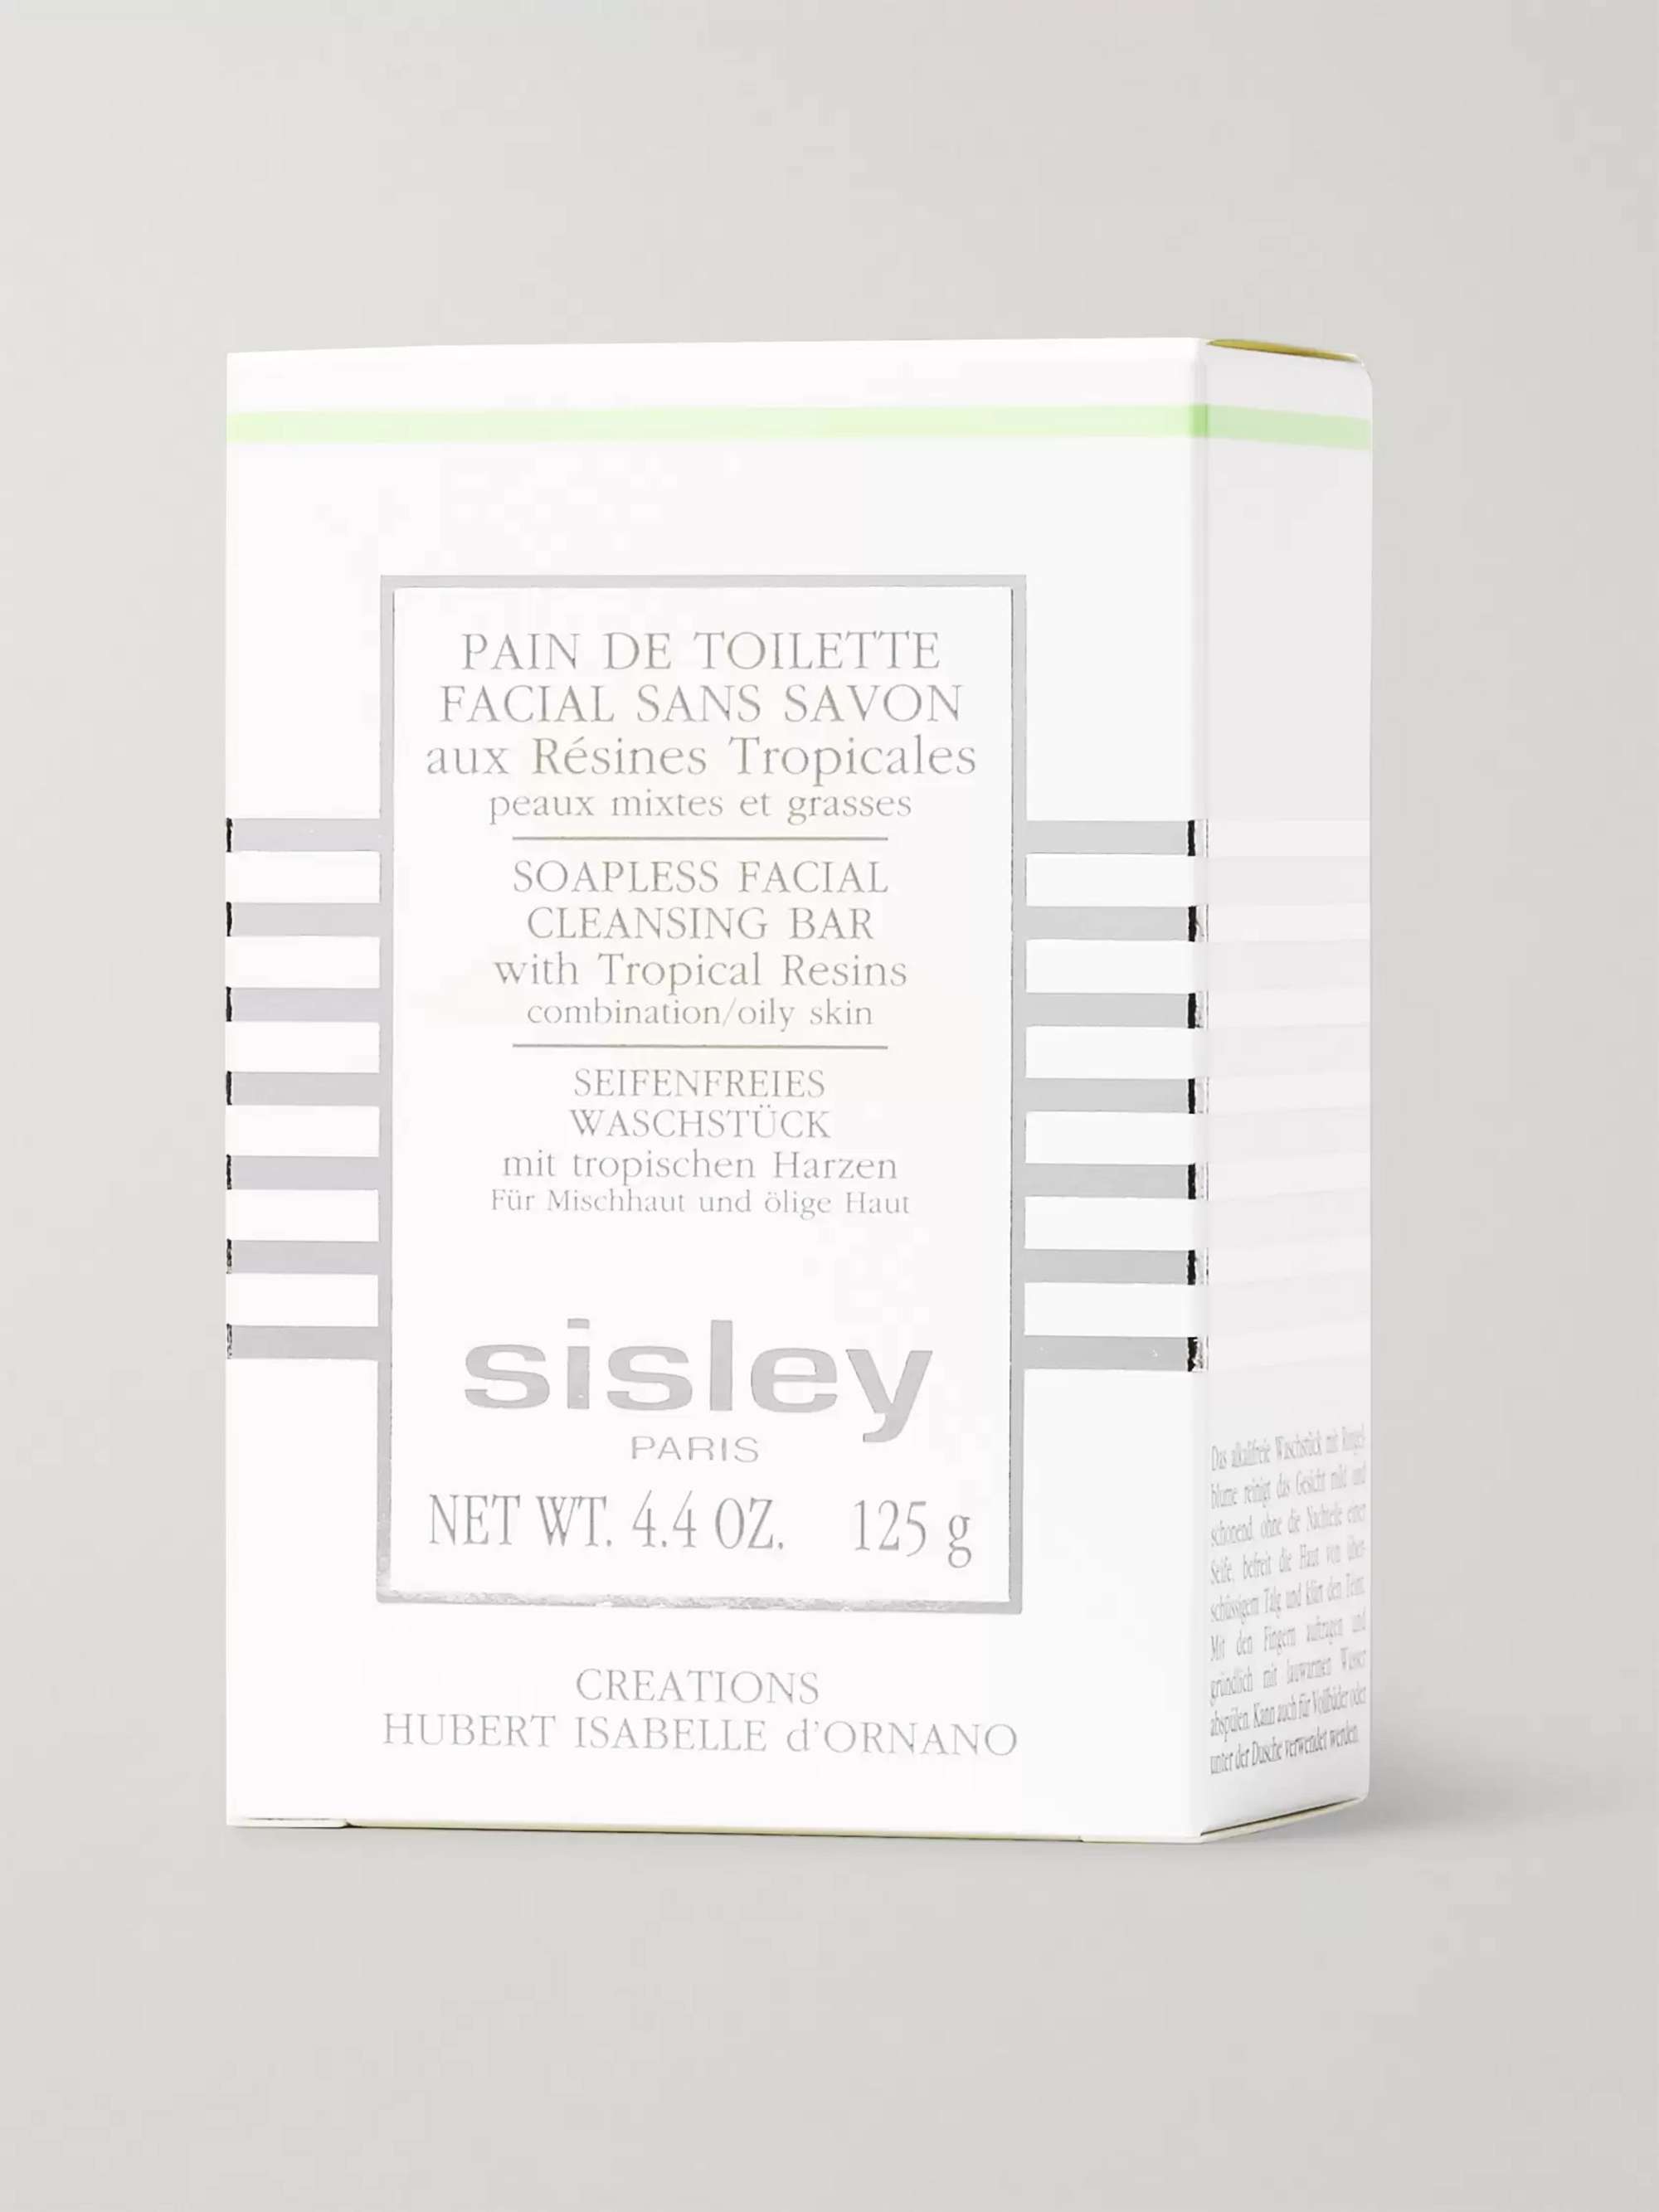 SISLEY Soapless Facial Cleansing Bar, 125g